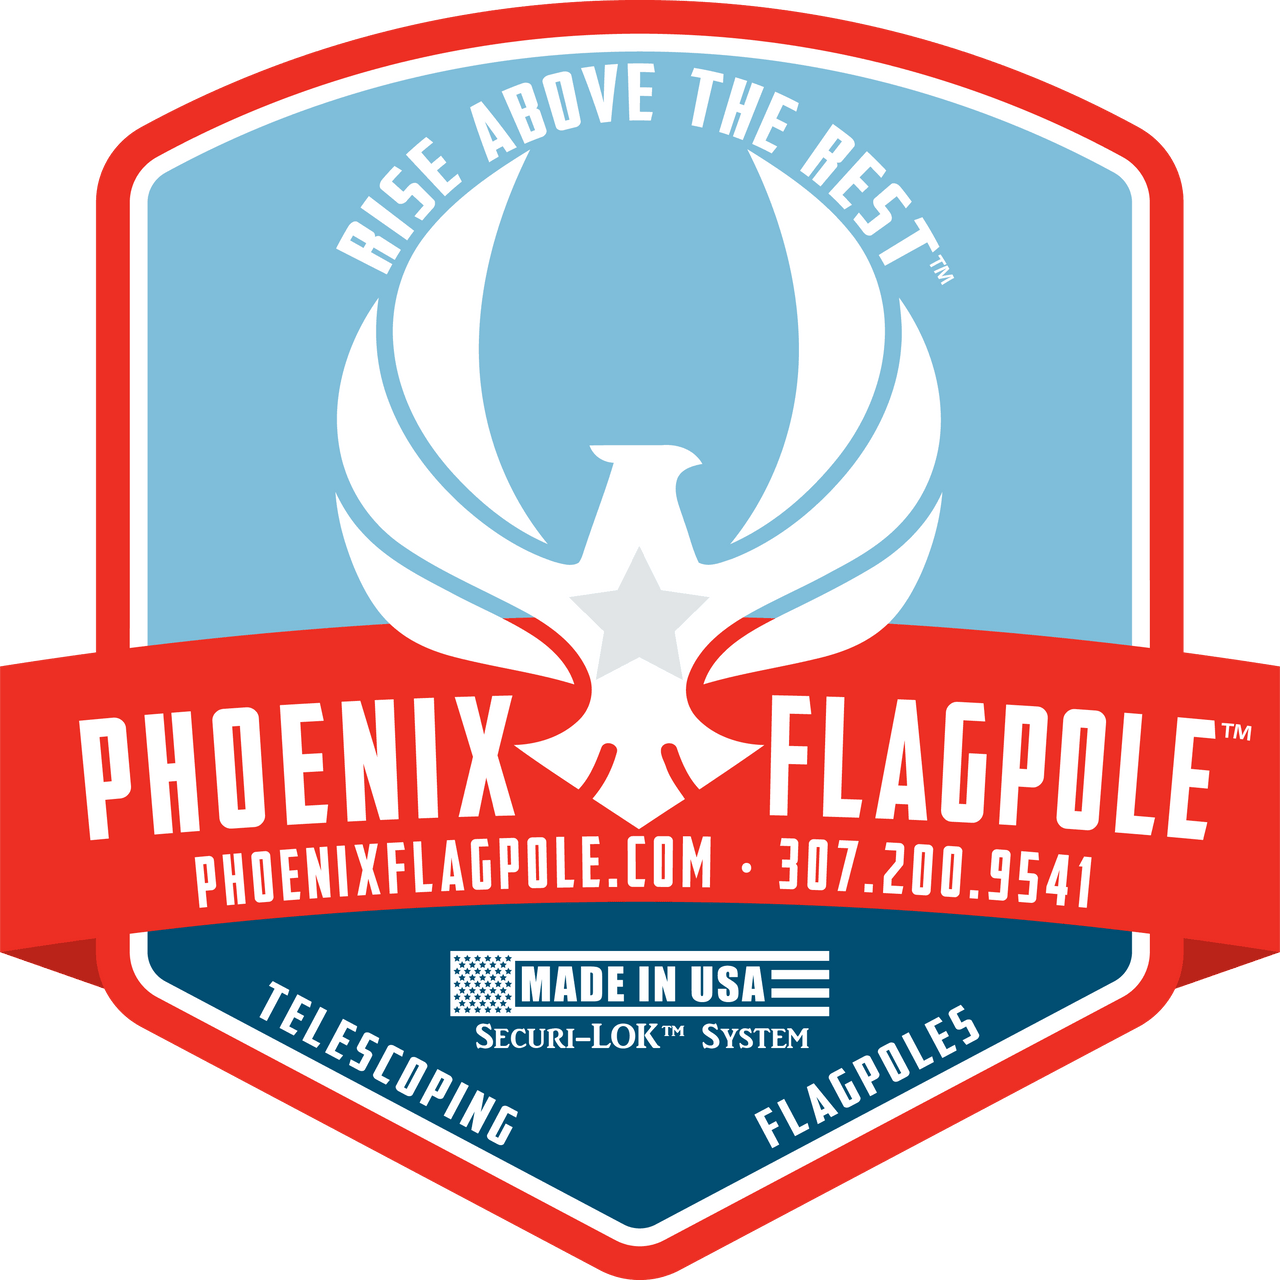 Phoenix Telescoping Flagpole with Free American Flag, Securi-Shur Anti-Theft Locking Clamp, and Lifetime Anti-Theft Guarantee